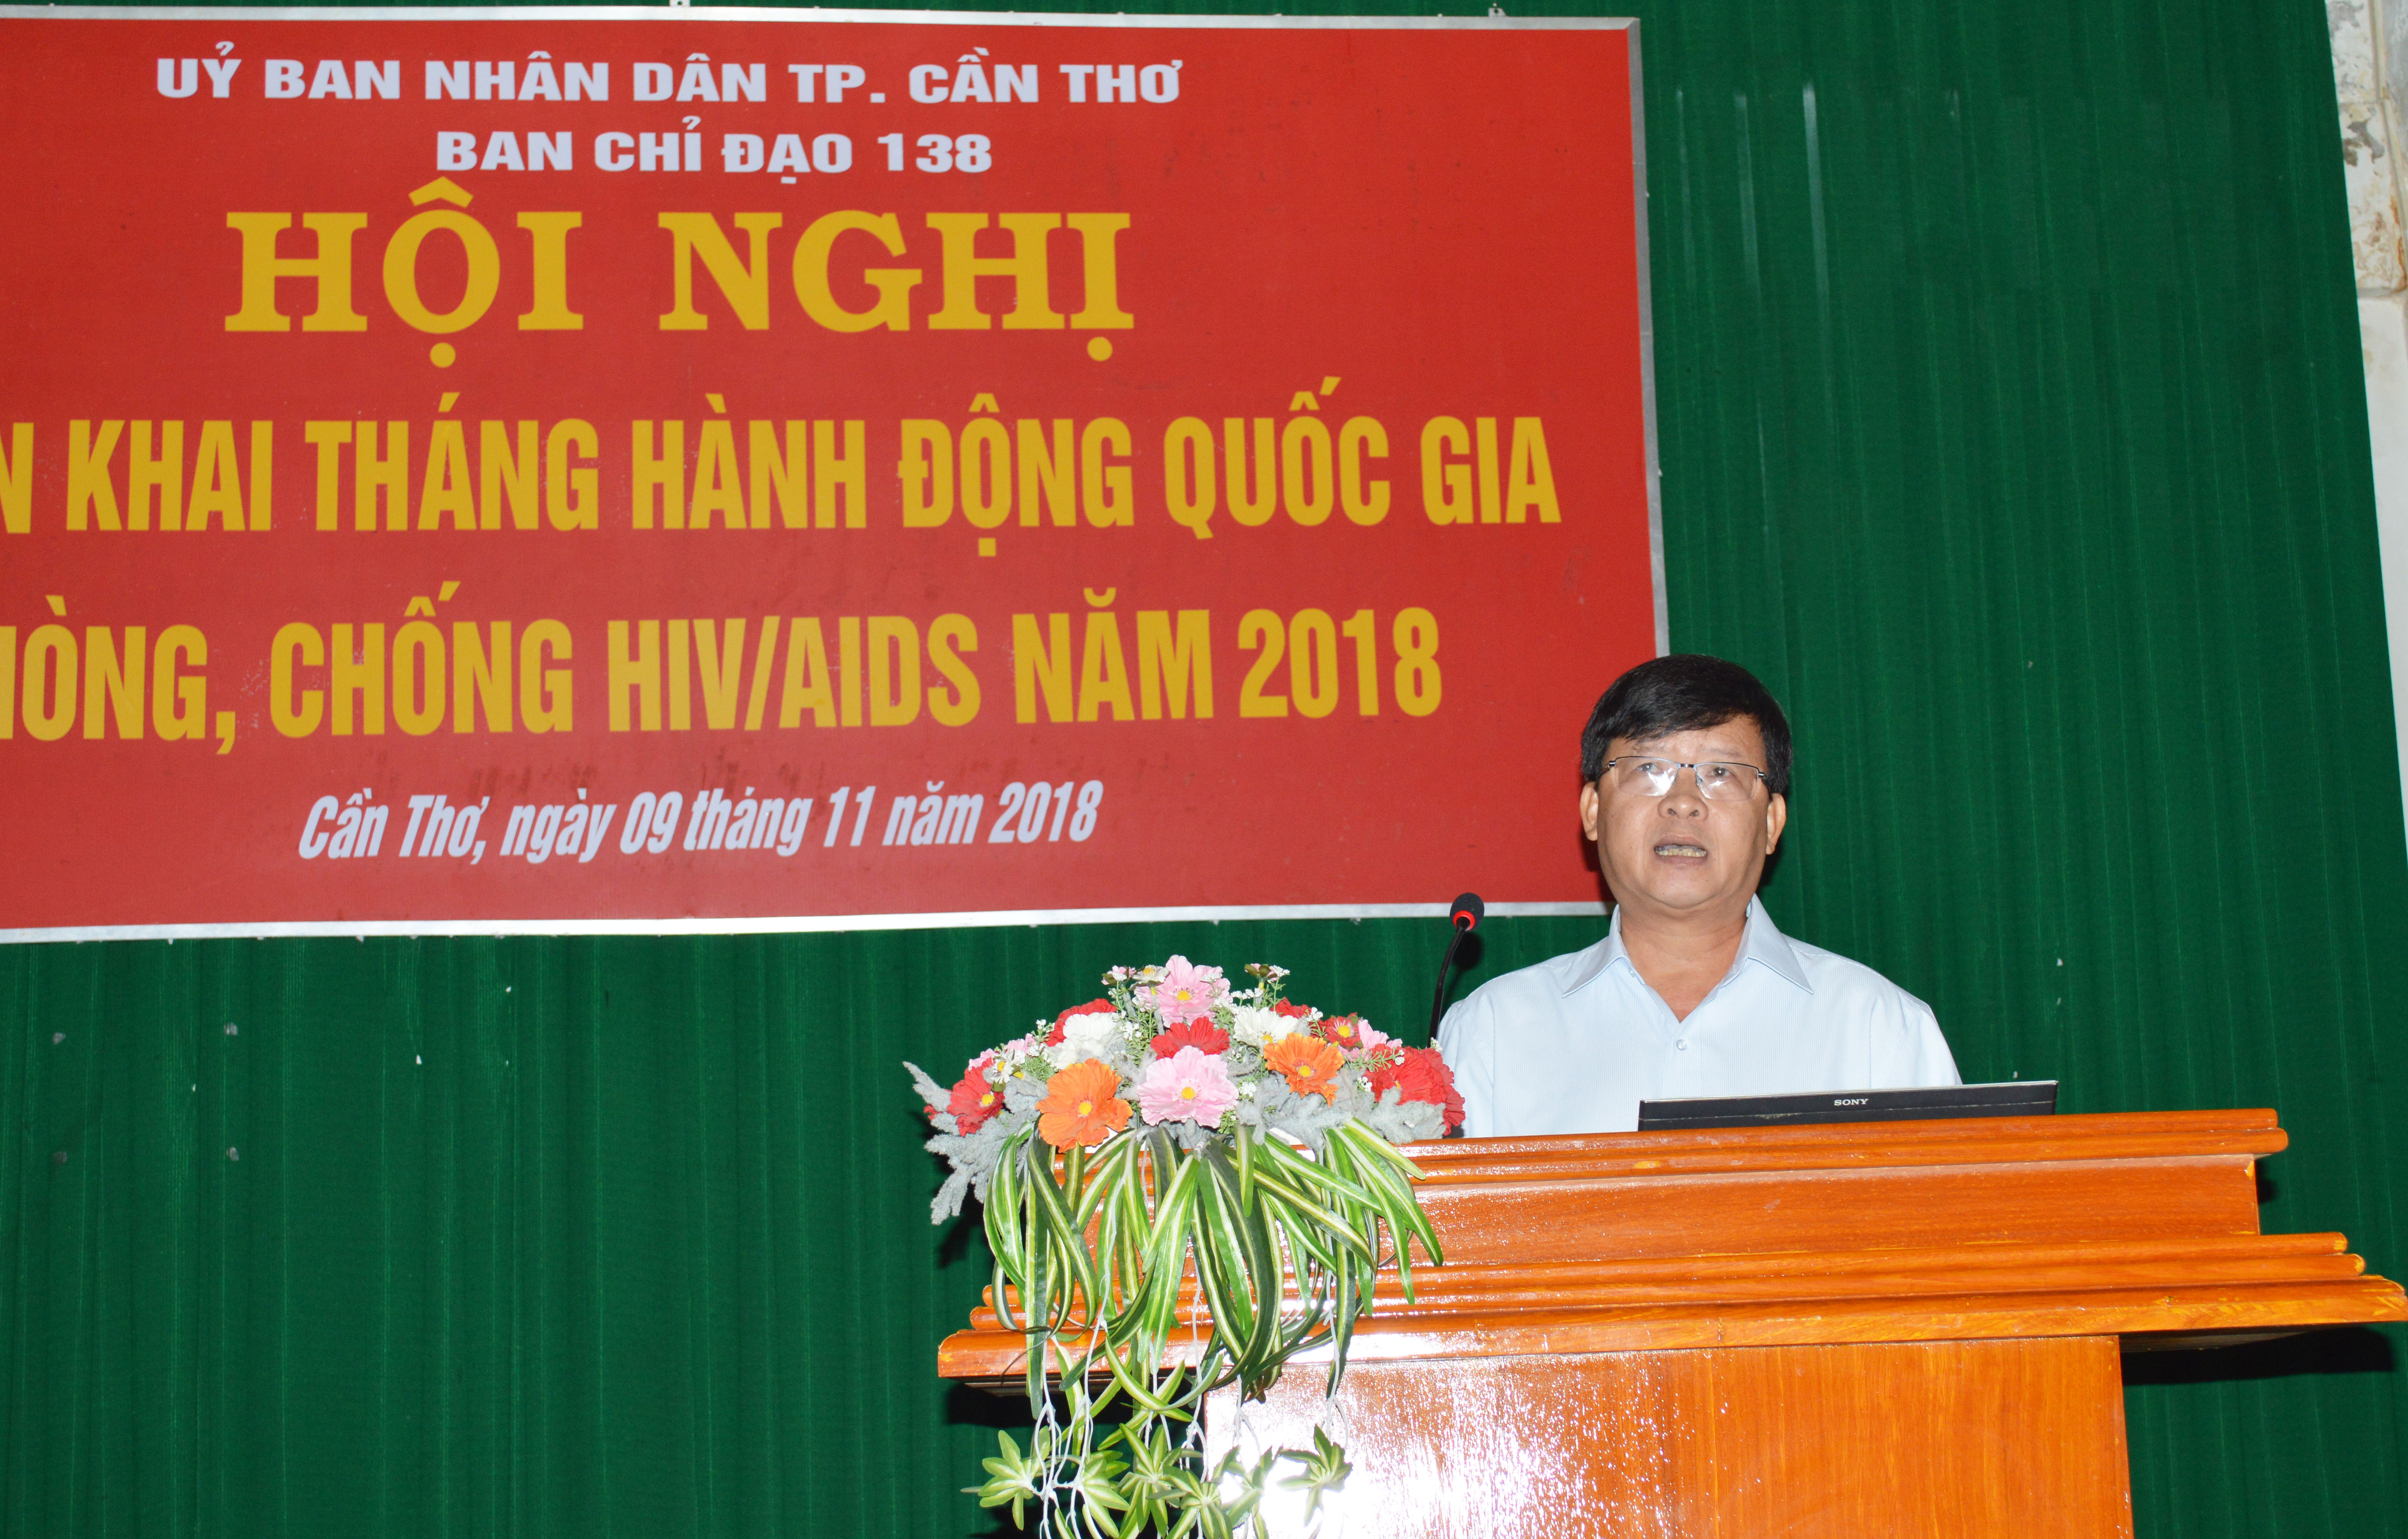 Trien khai thang hanh dong pc HIV AIDS 2018_HIV02.jpg